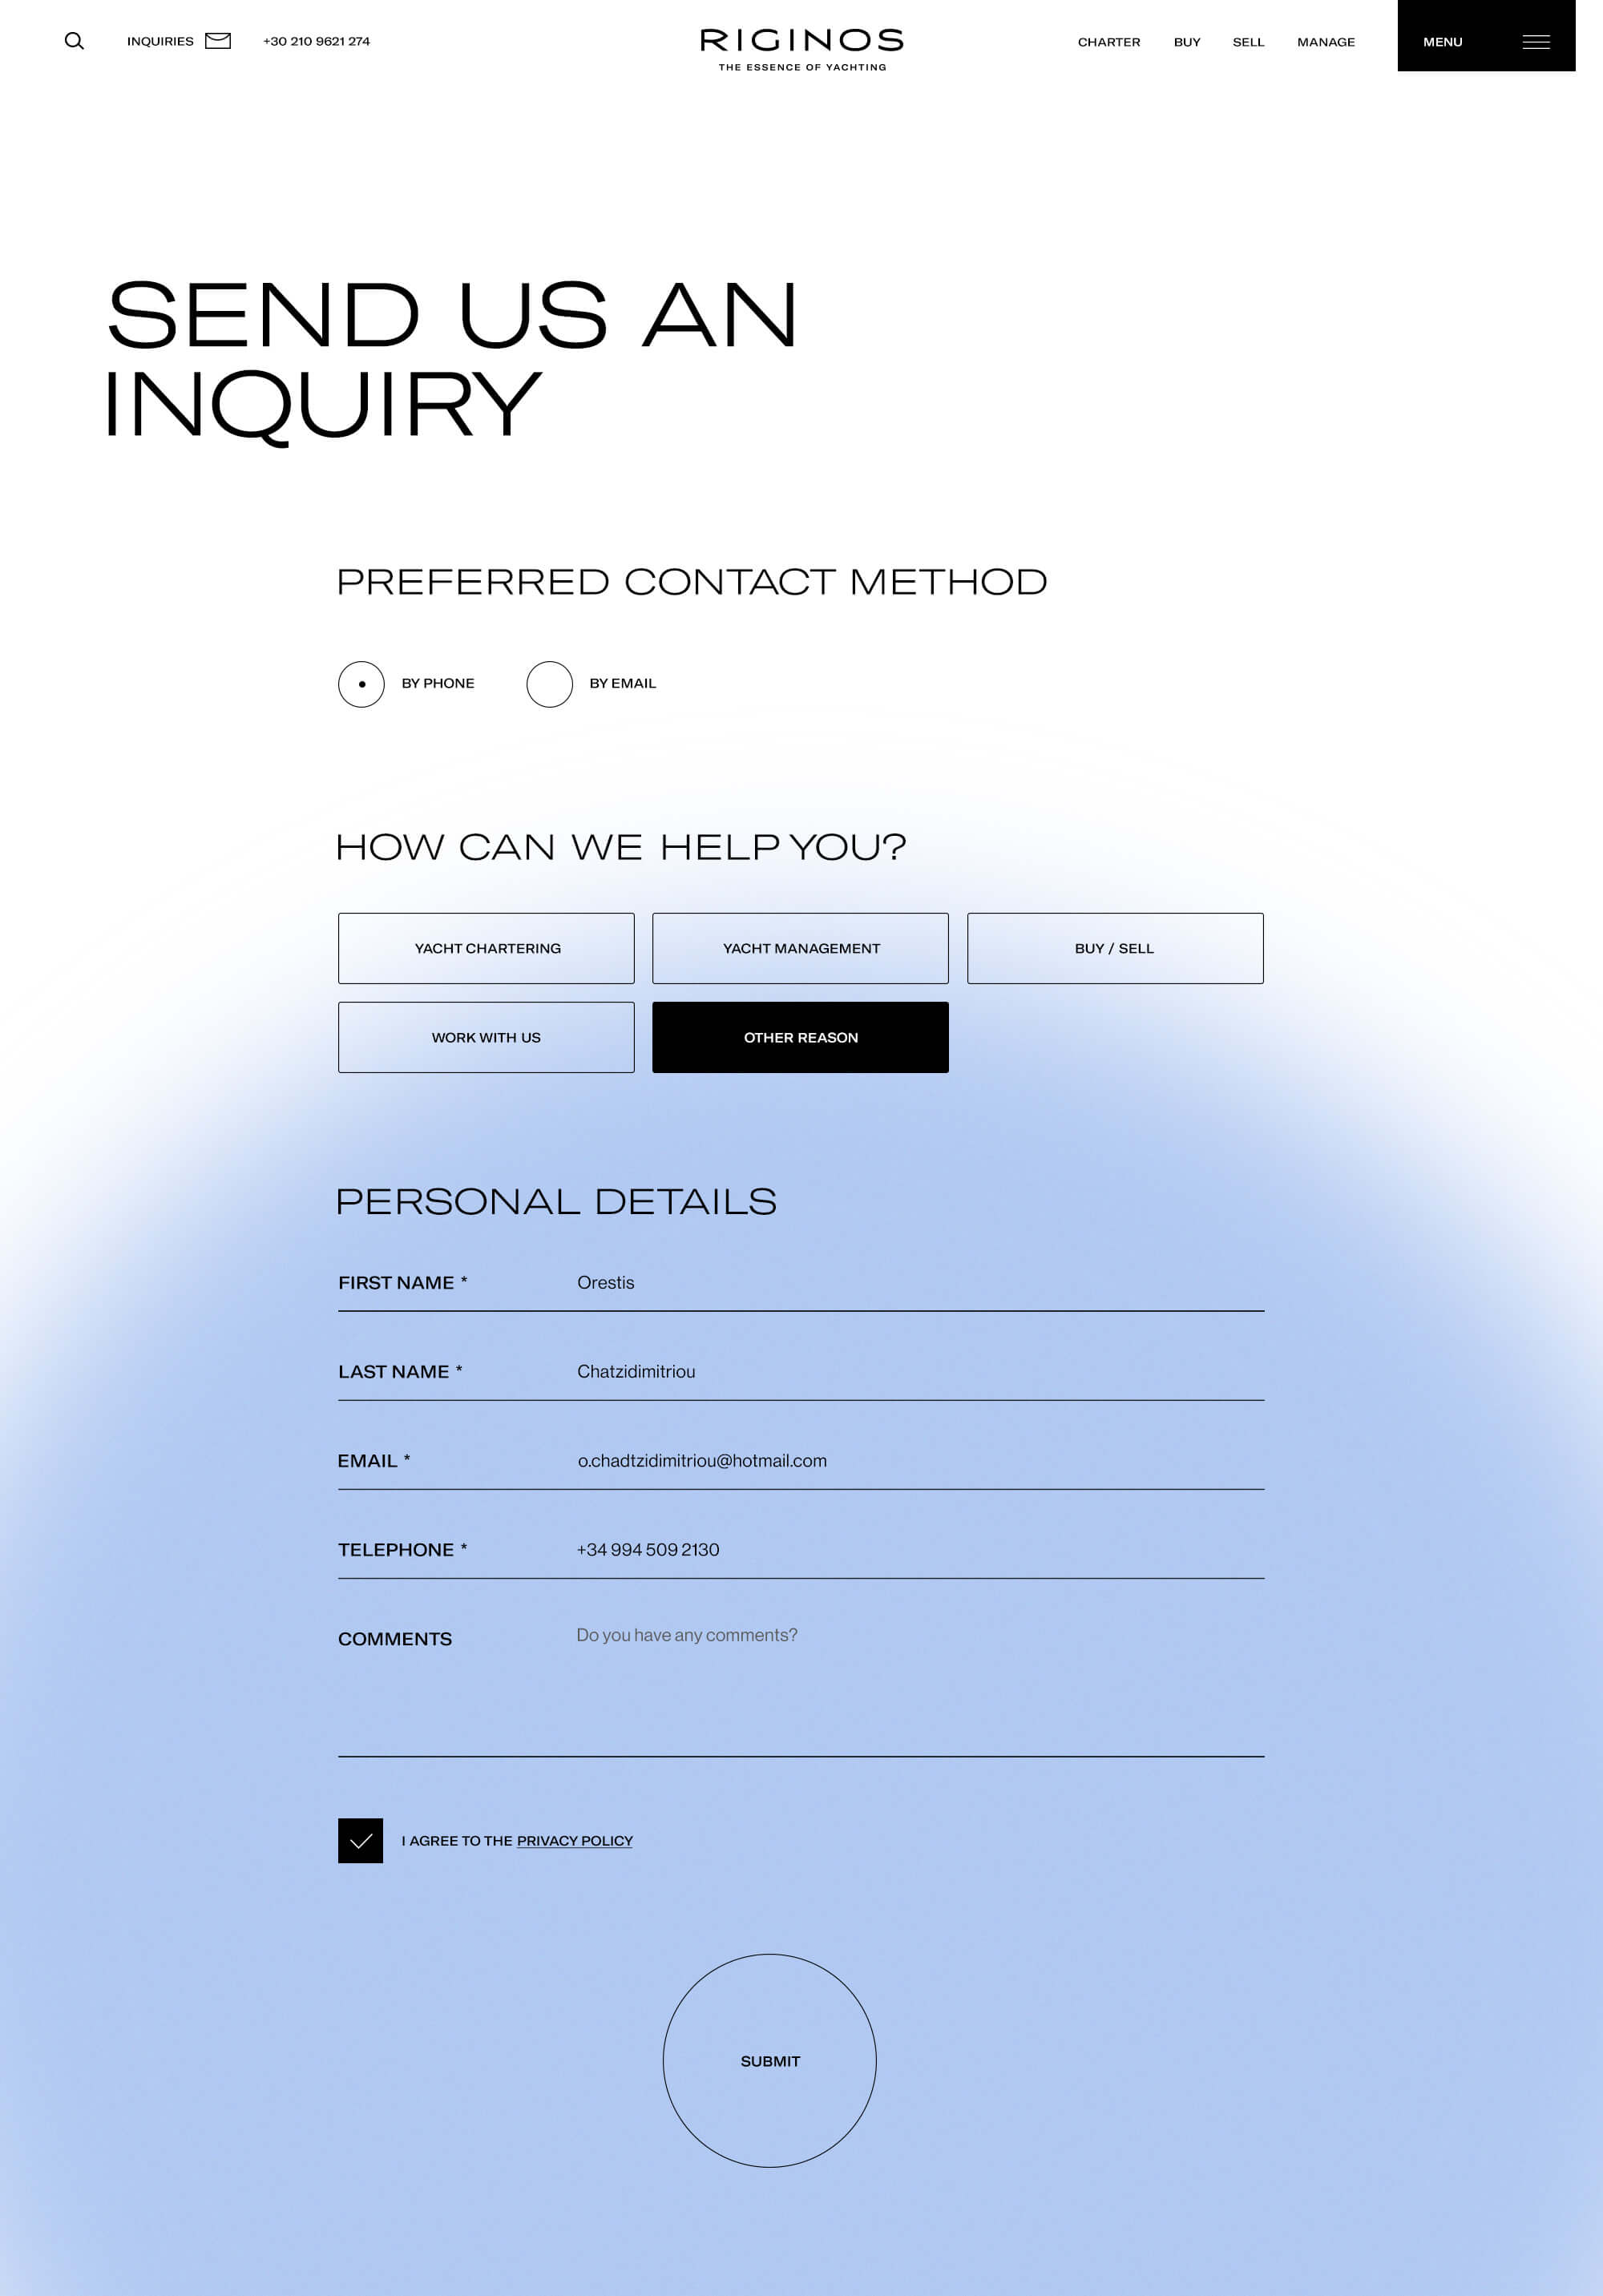 riginos yachts website design contact form kommigraphics